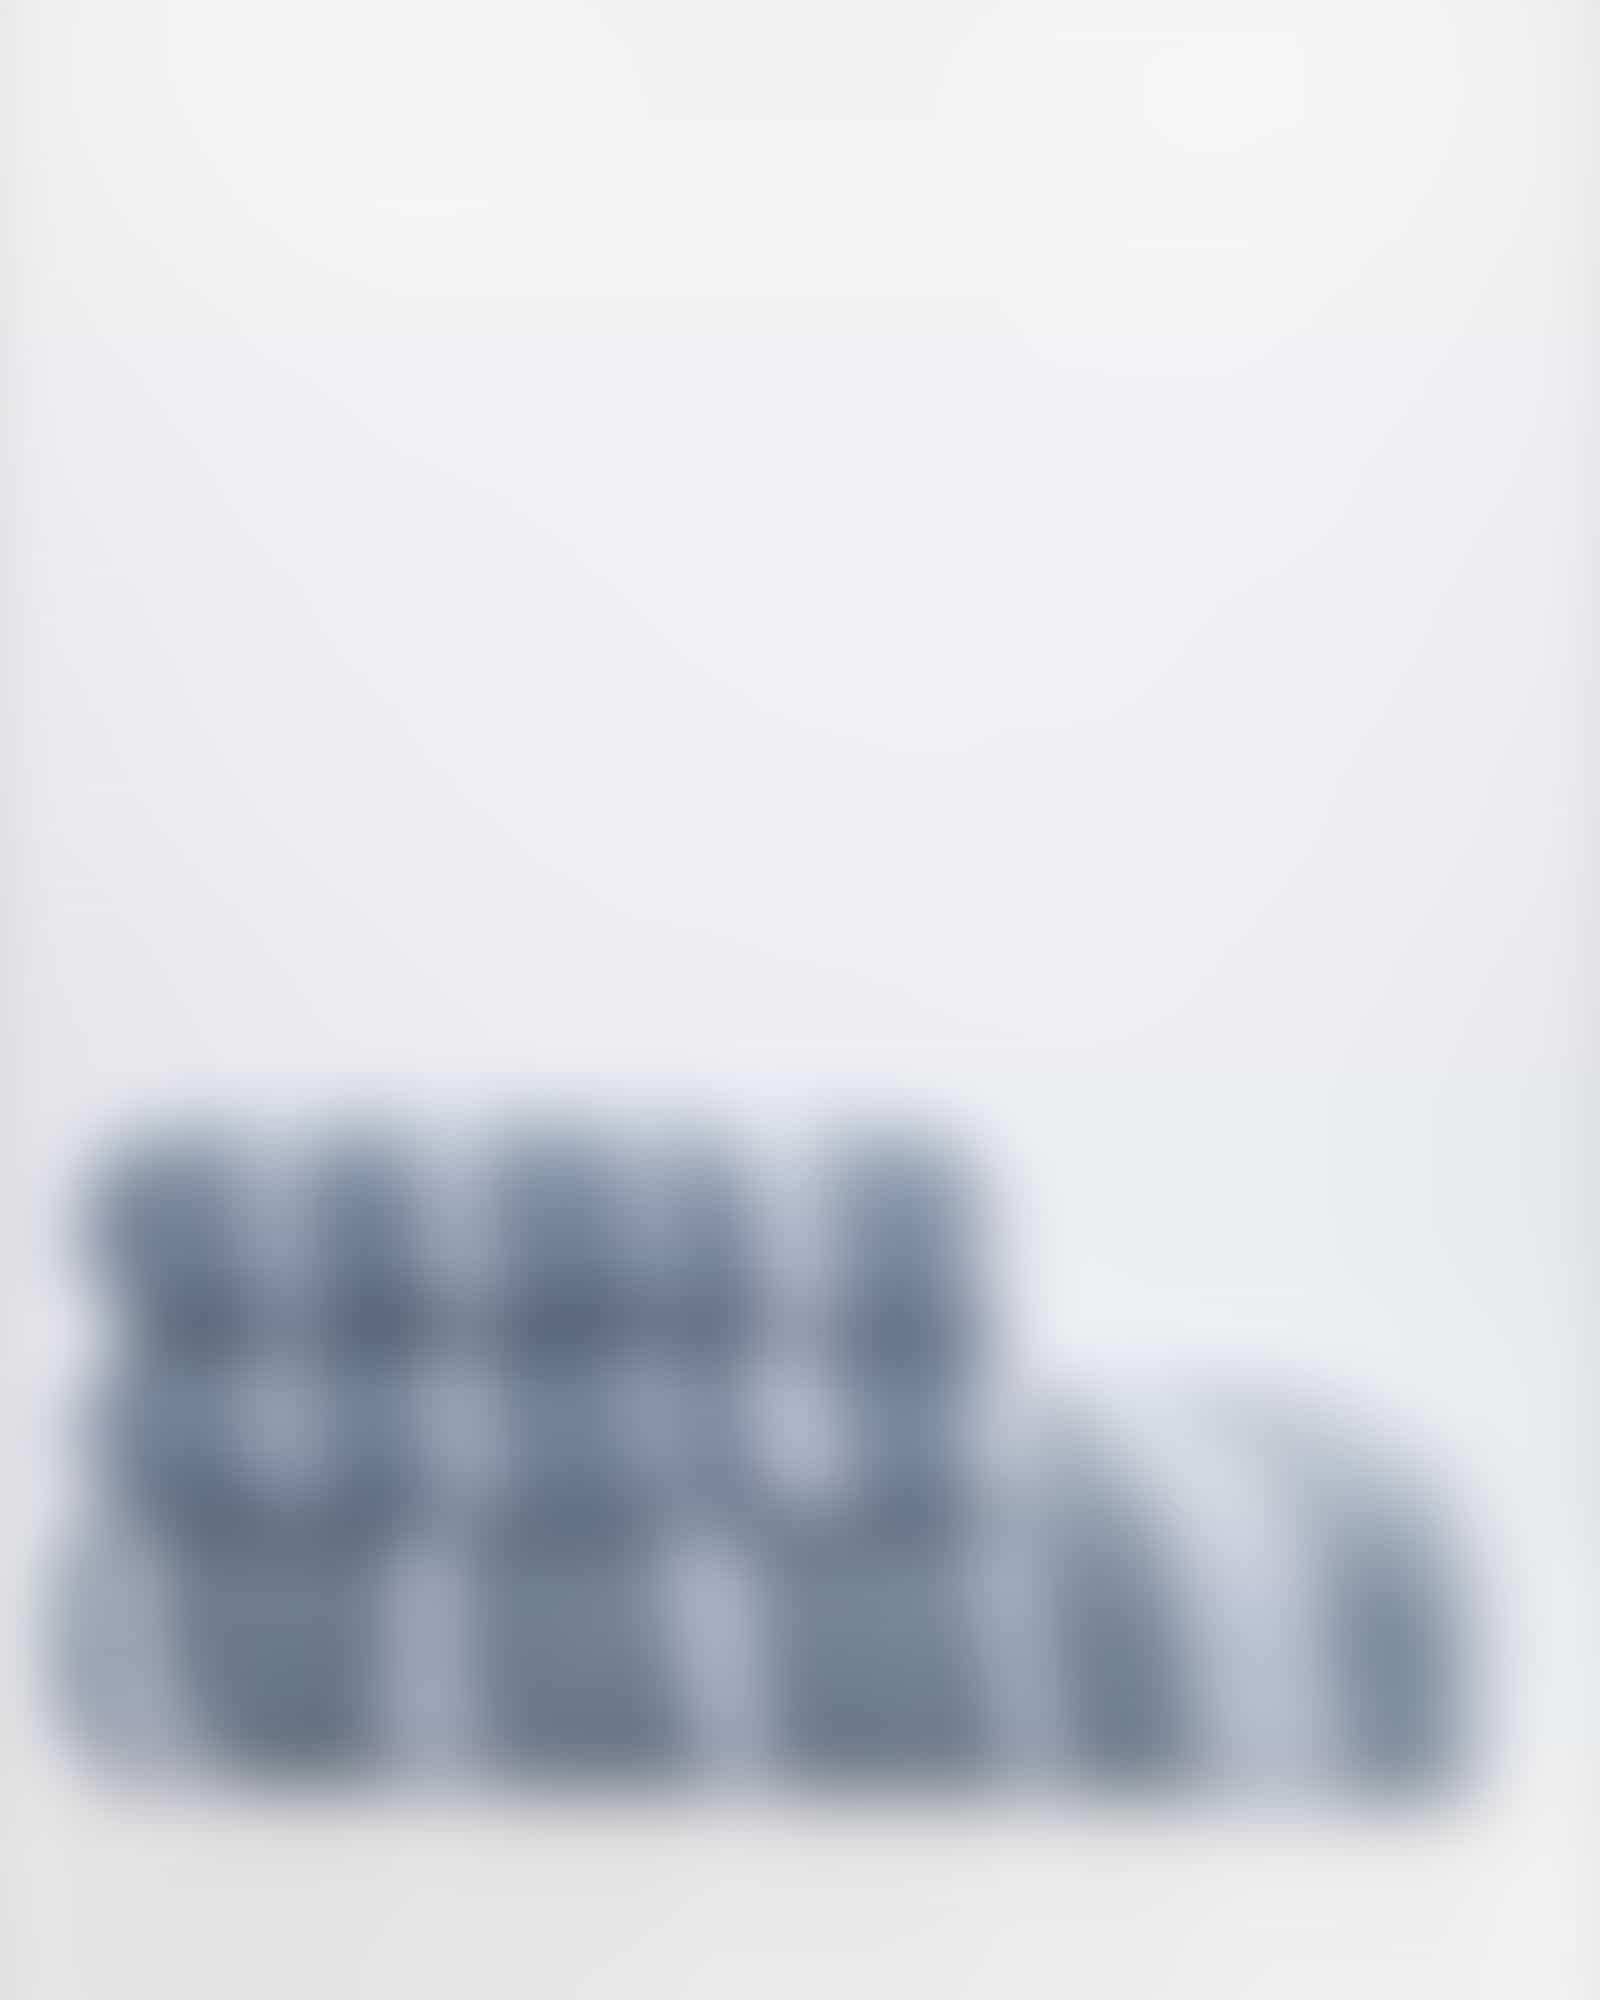 Villeroy &amp; Boch Handtücher Coordinates Leaf 2558 - Farbe: fog - 11 - Handtuch 50x100 cm